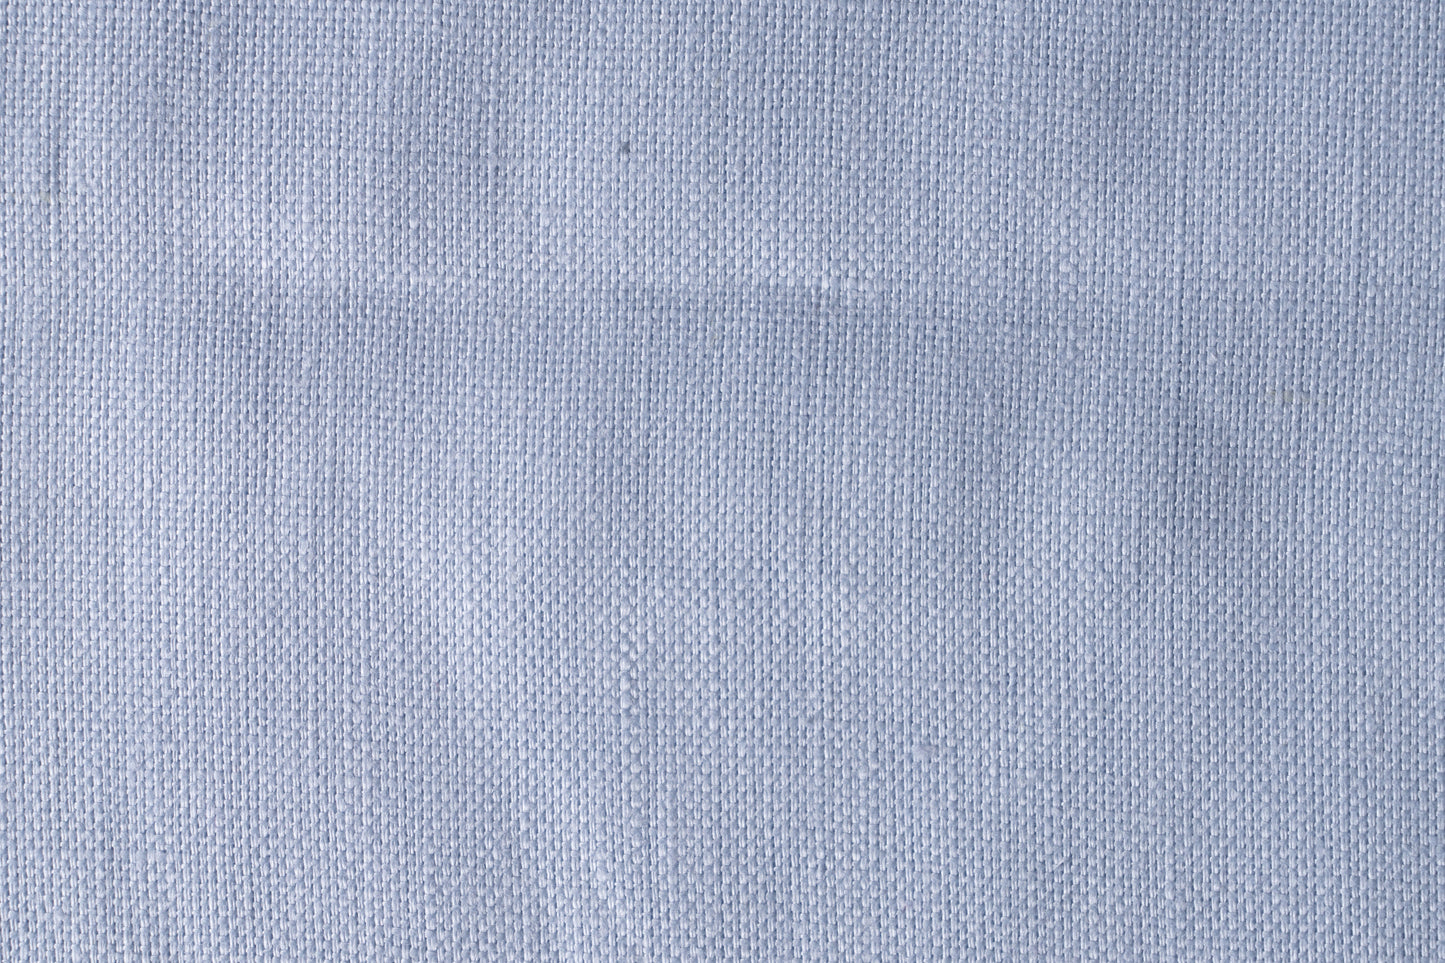 Home Furnishing Linen (11 oz/square yard) Swatch